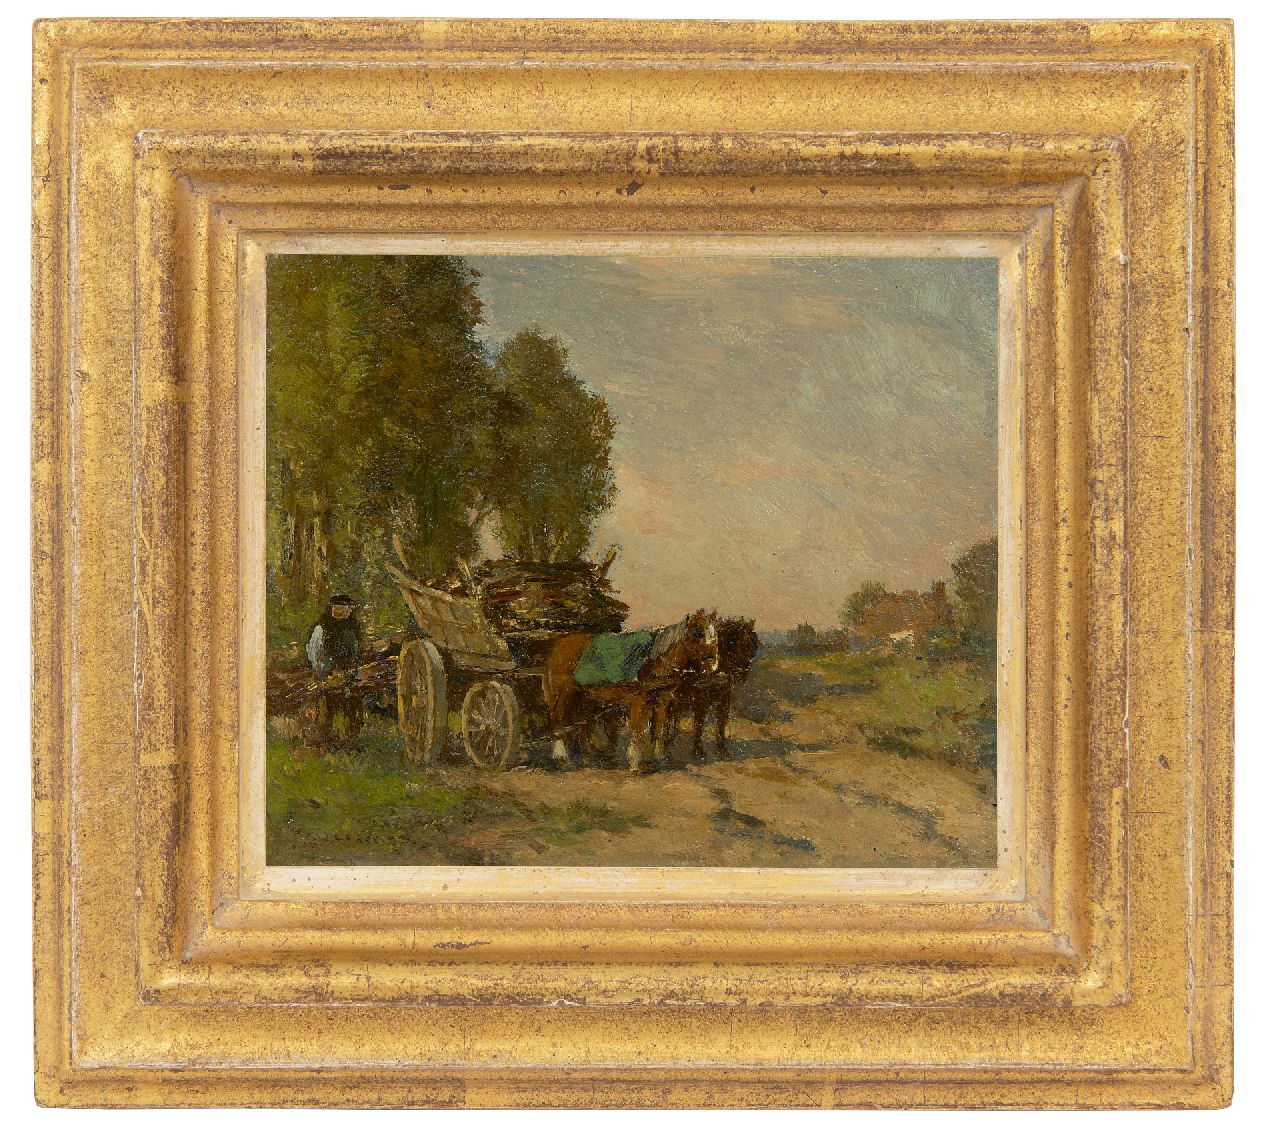 Akkeringa J.E.H.  | 'Johannes Evert' Hendrik Akkeringa | Paintings offered for sale | Gathering wood at the edge of the forest, oil on panel 13.5 x 15.8 cm, signed l.l.